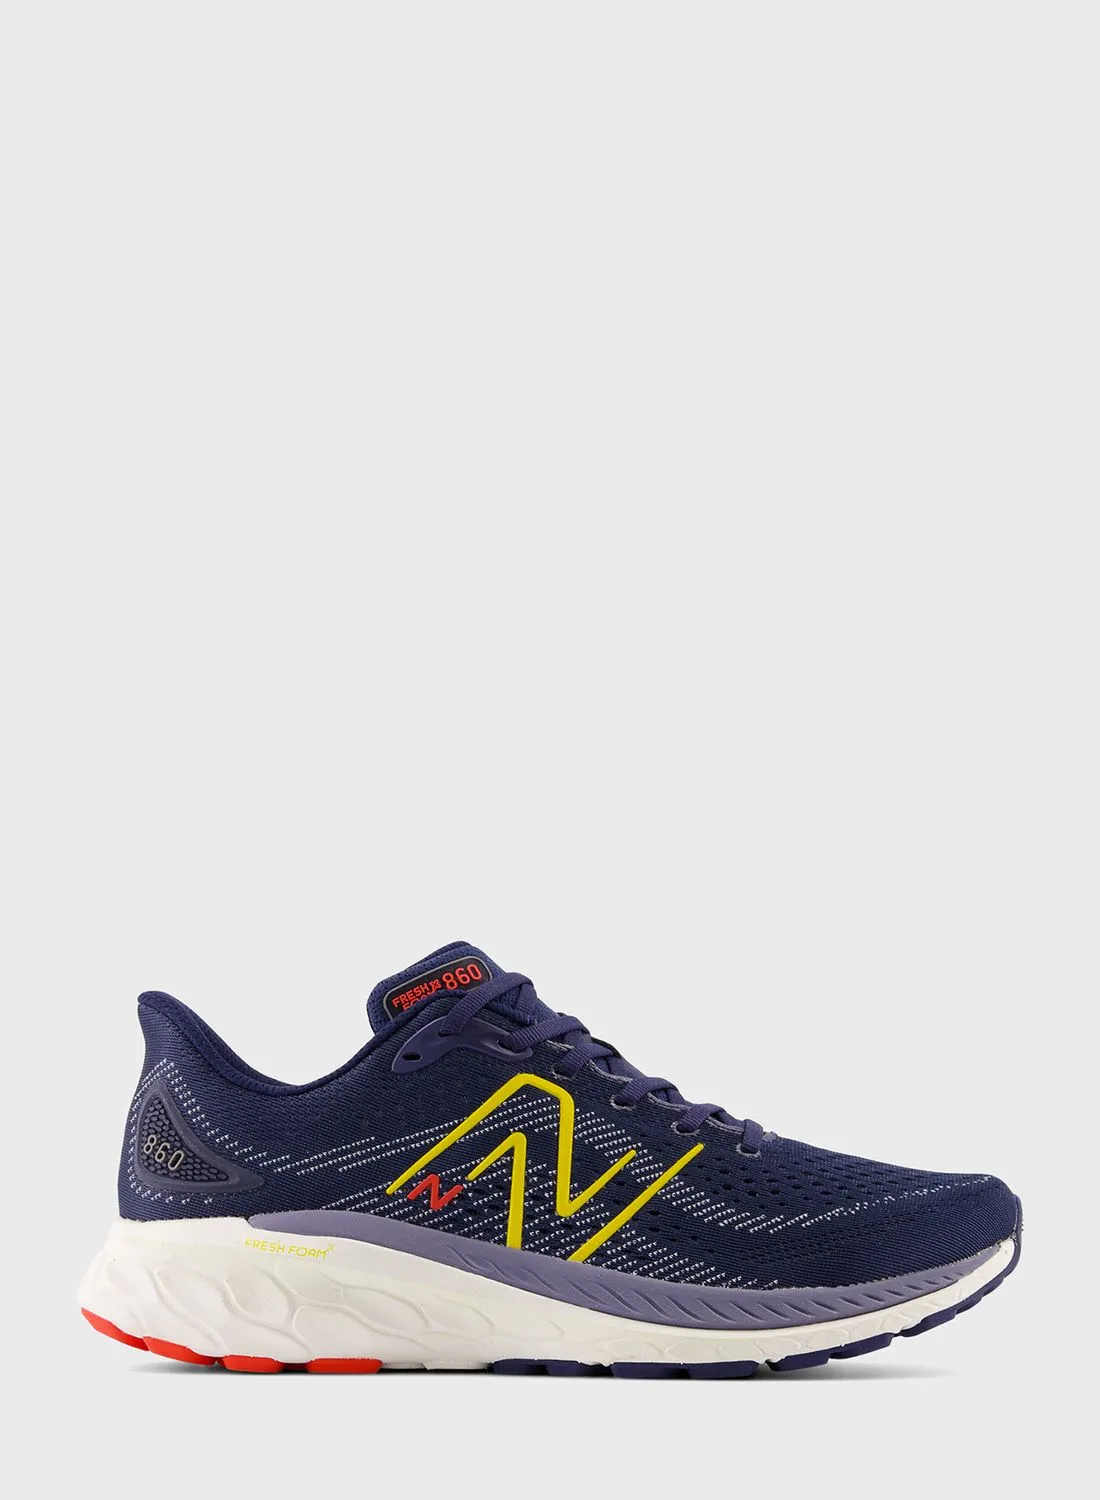 New Balance 860 Running Shoes